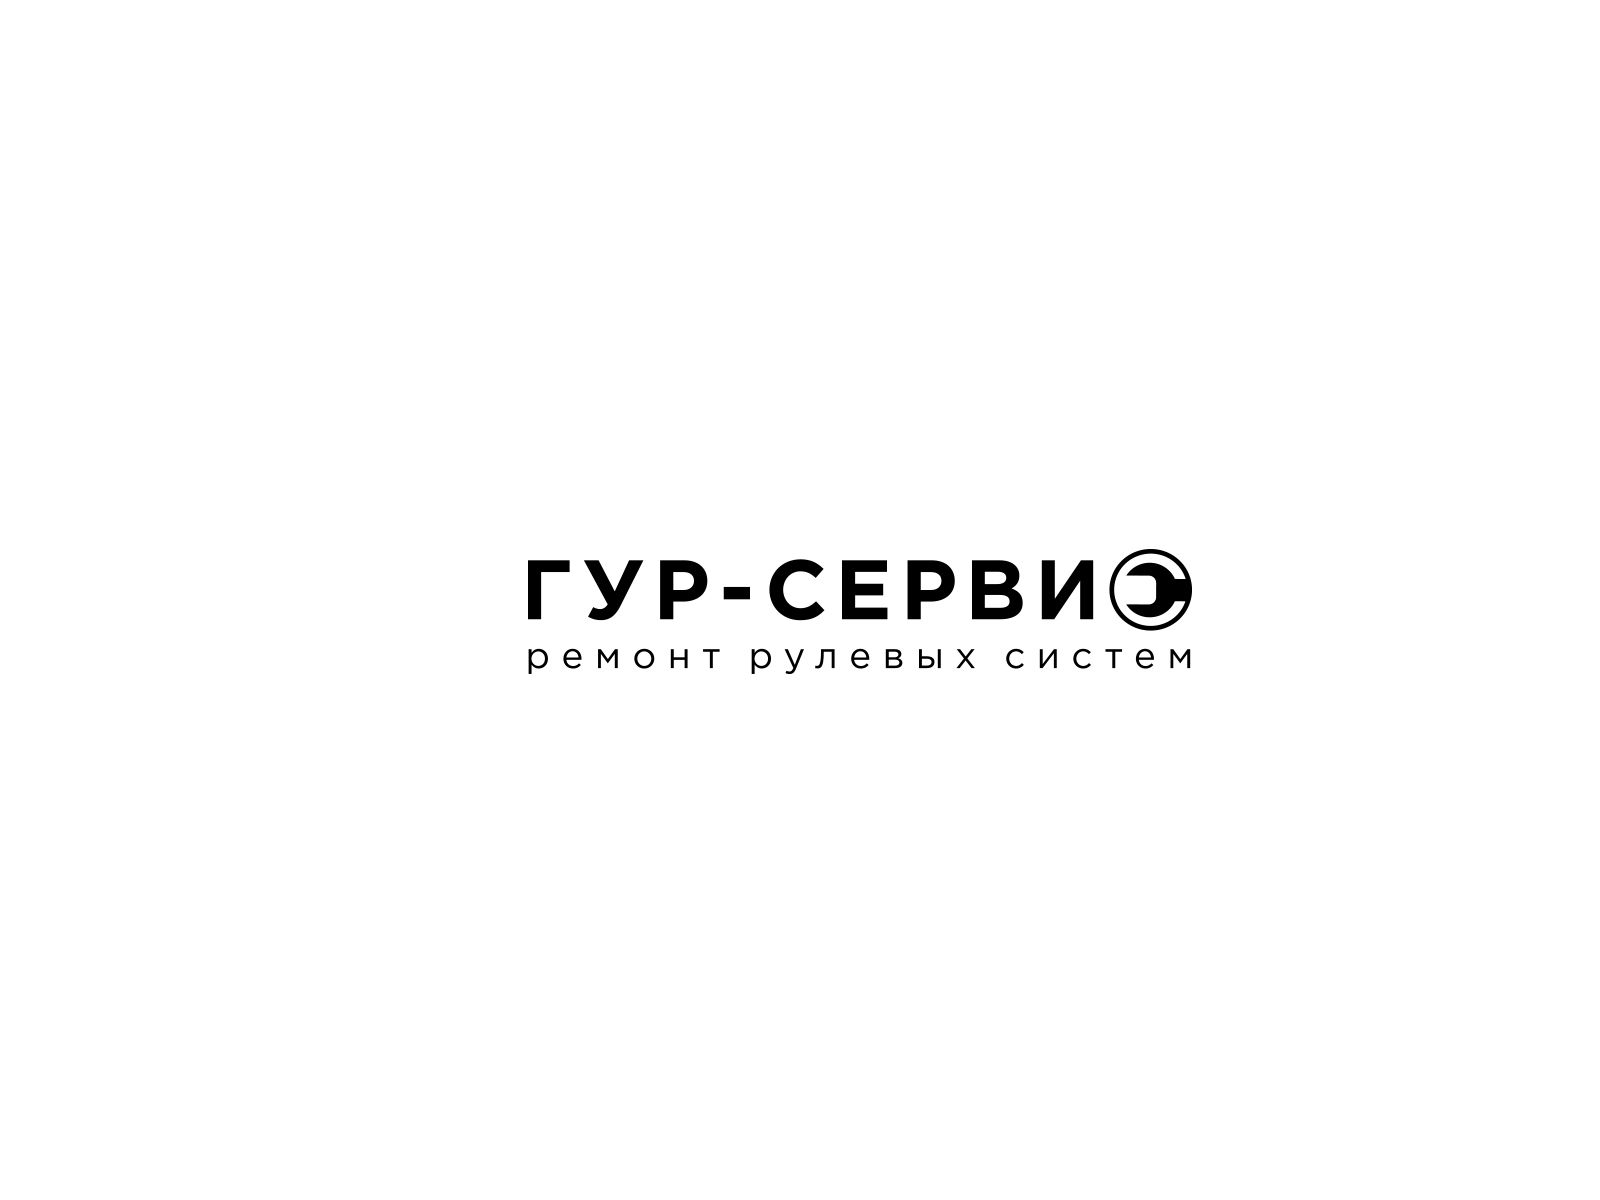 Логотип для ГУР-СЕРВИС - дизайнер U4po4mak